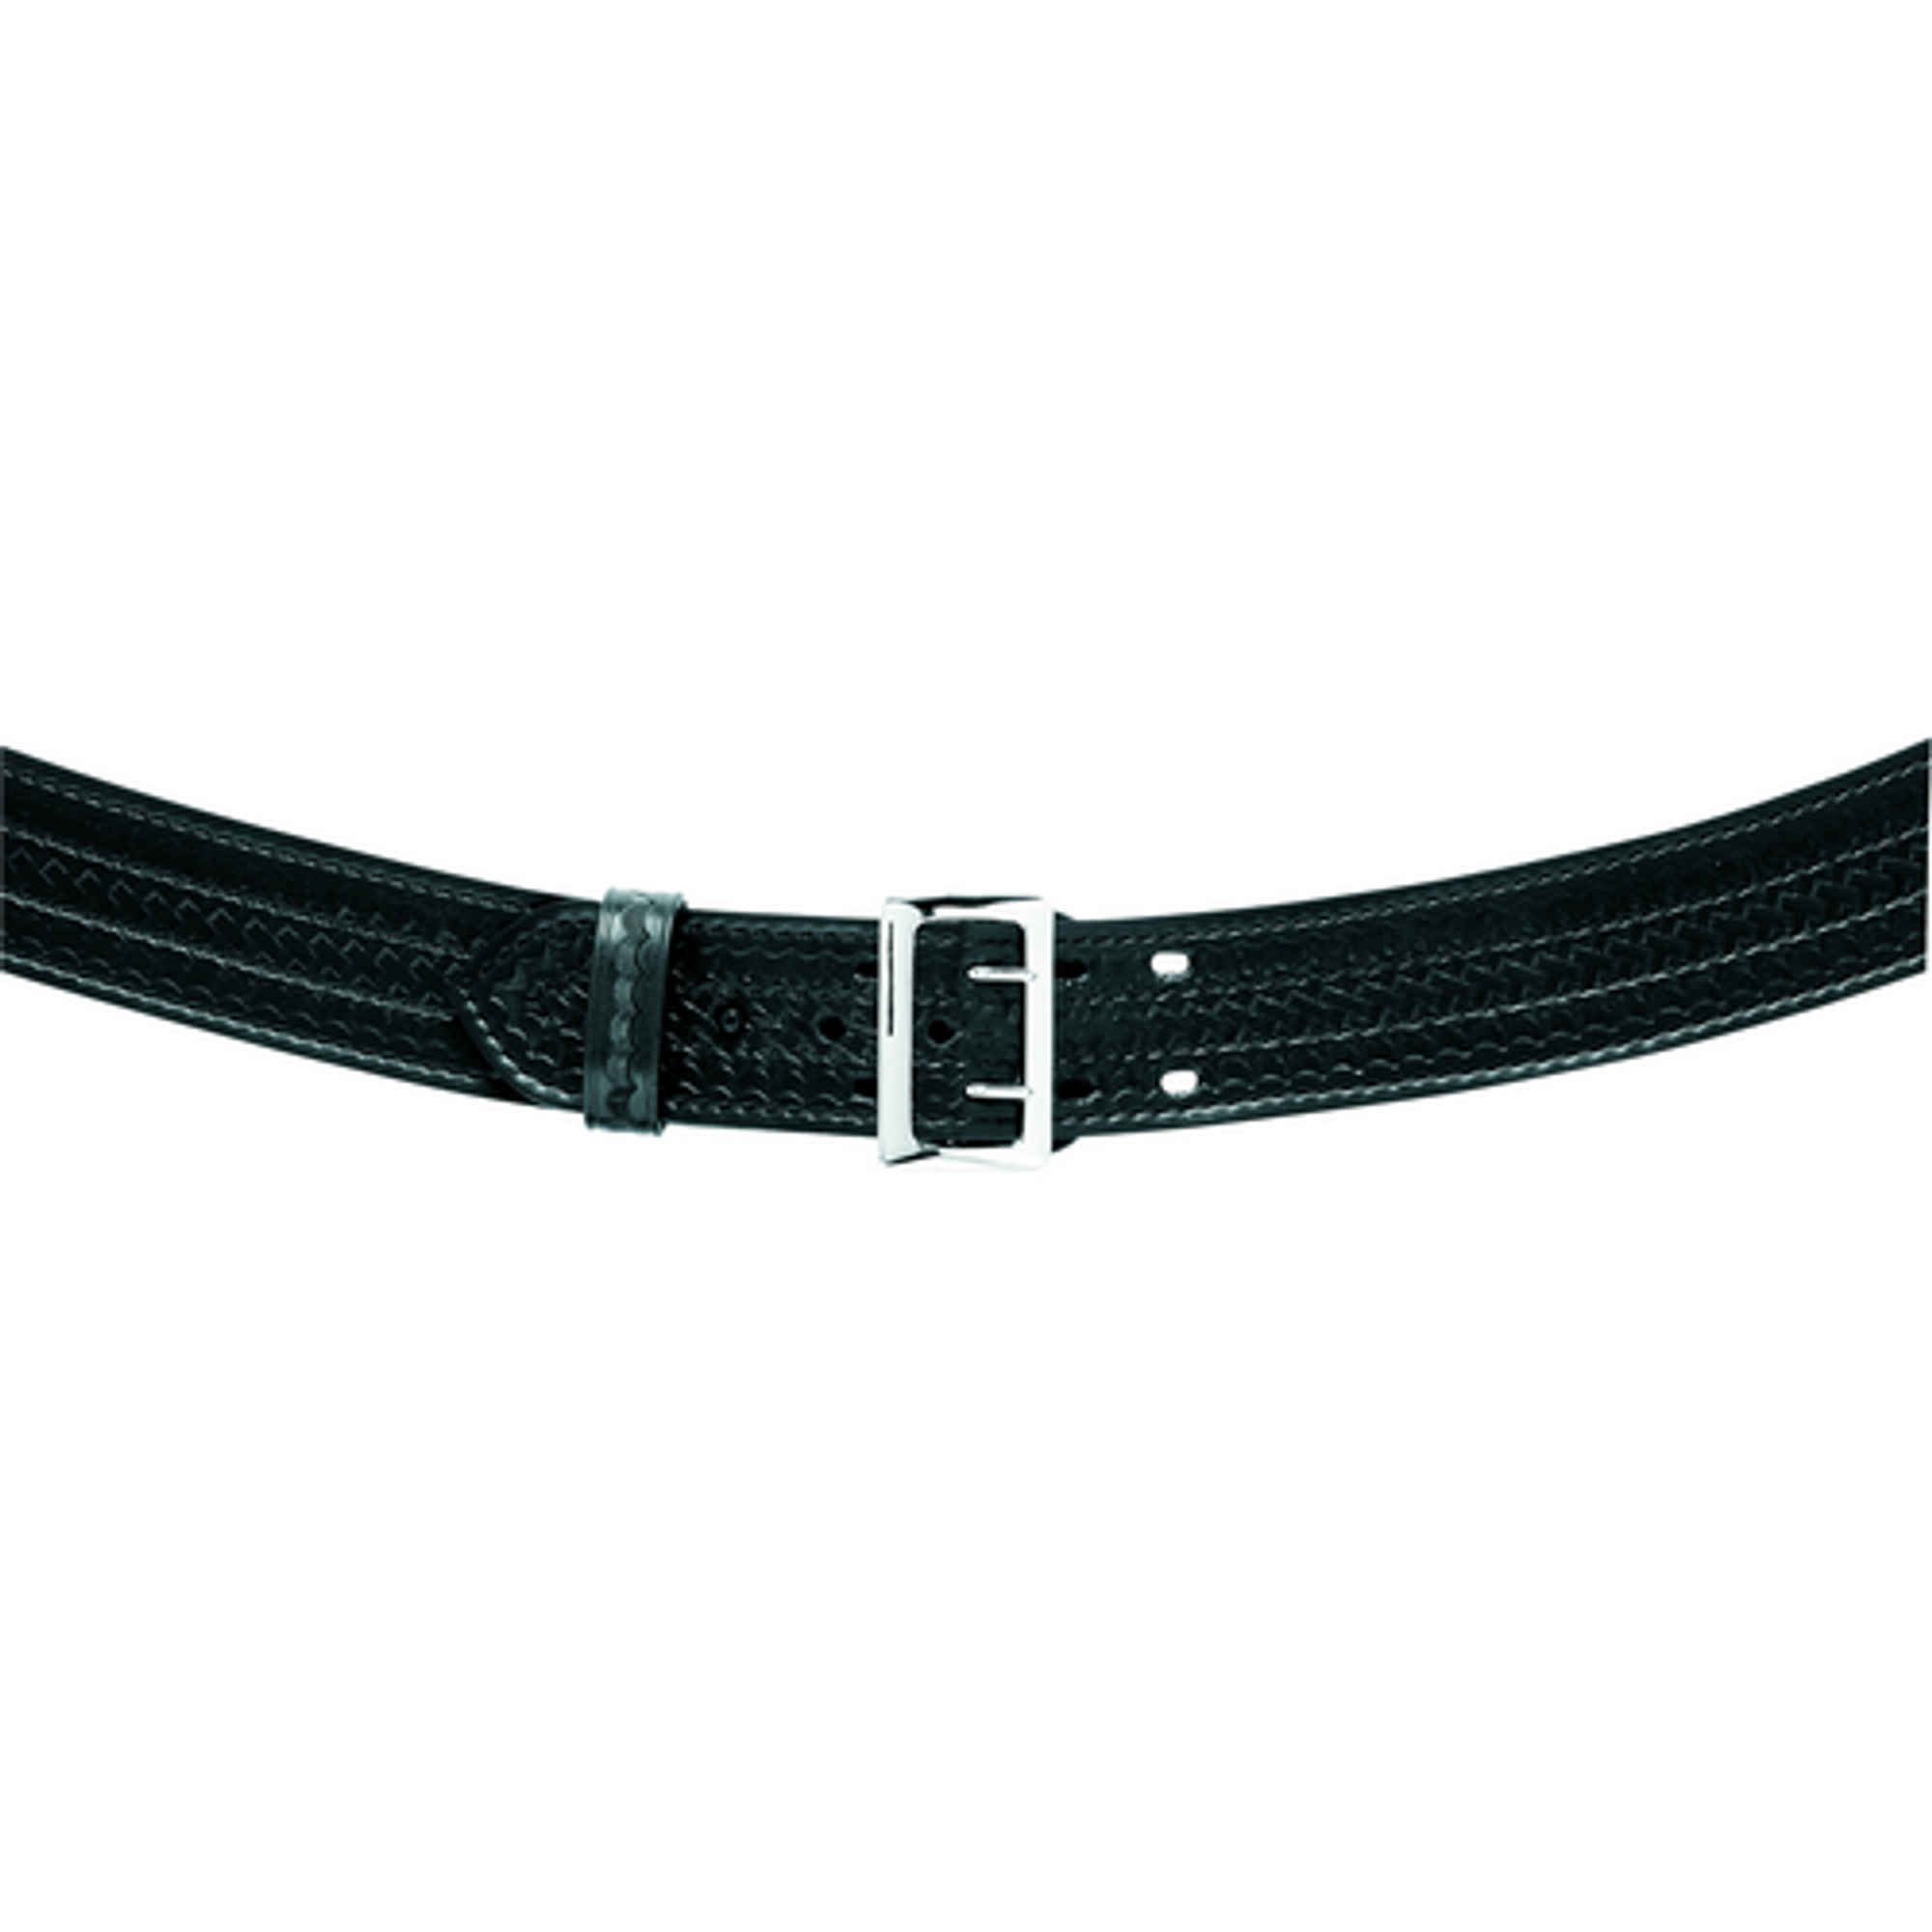 872 - Contoured Duty Belt, Suede Lined, 2.25 (58mm) - KR872-34-9